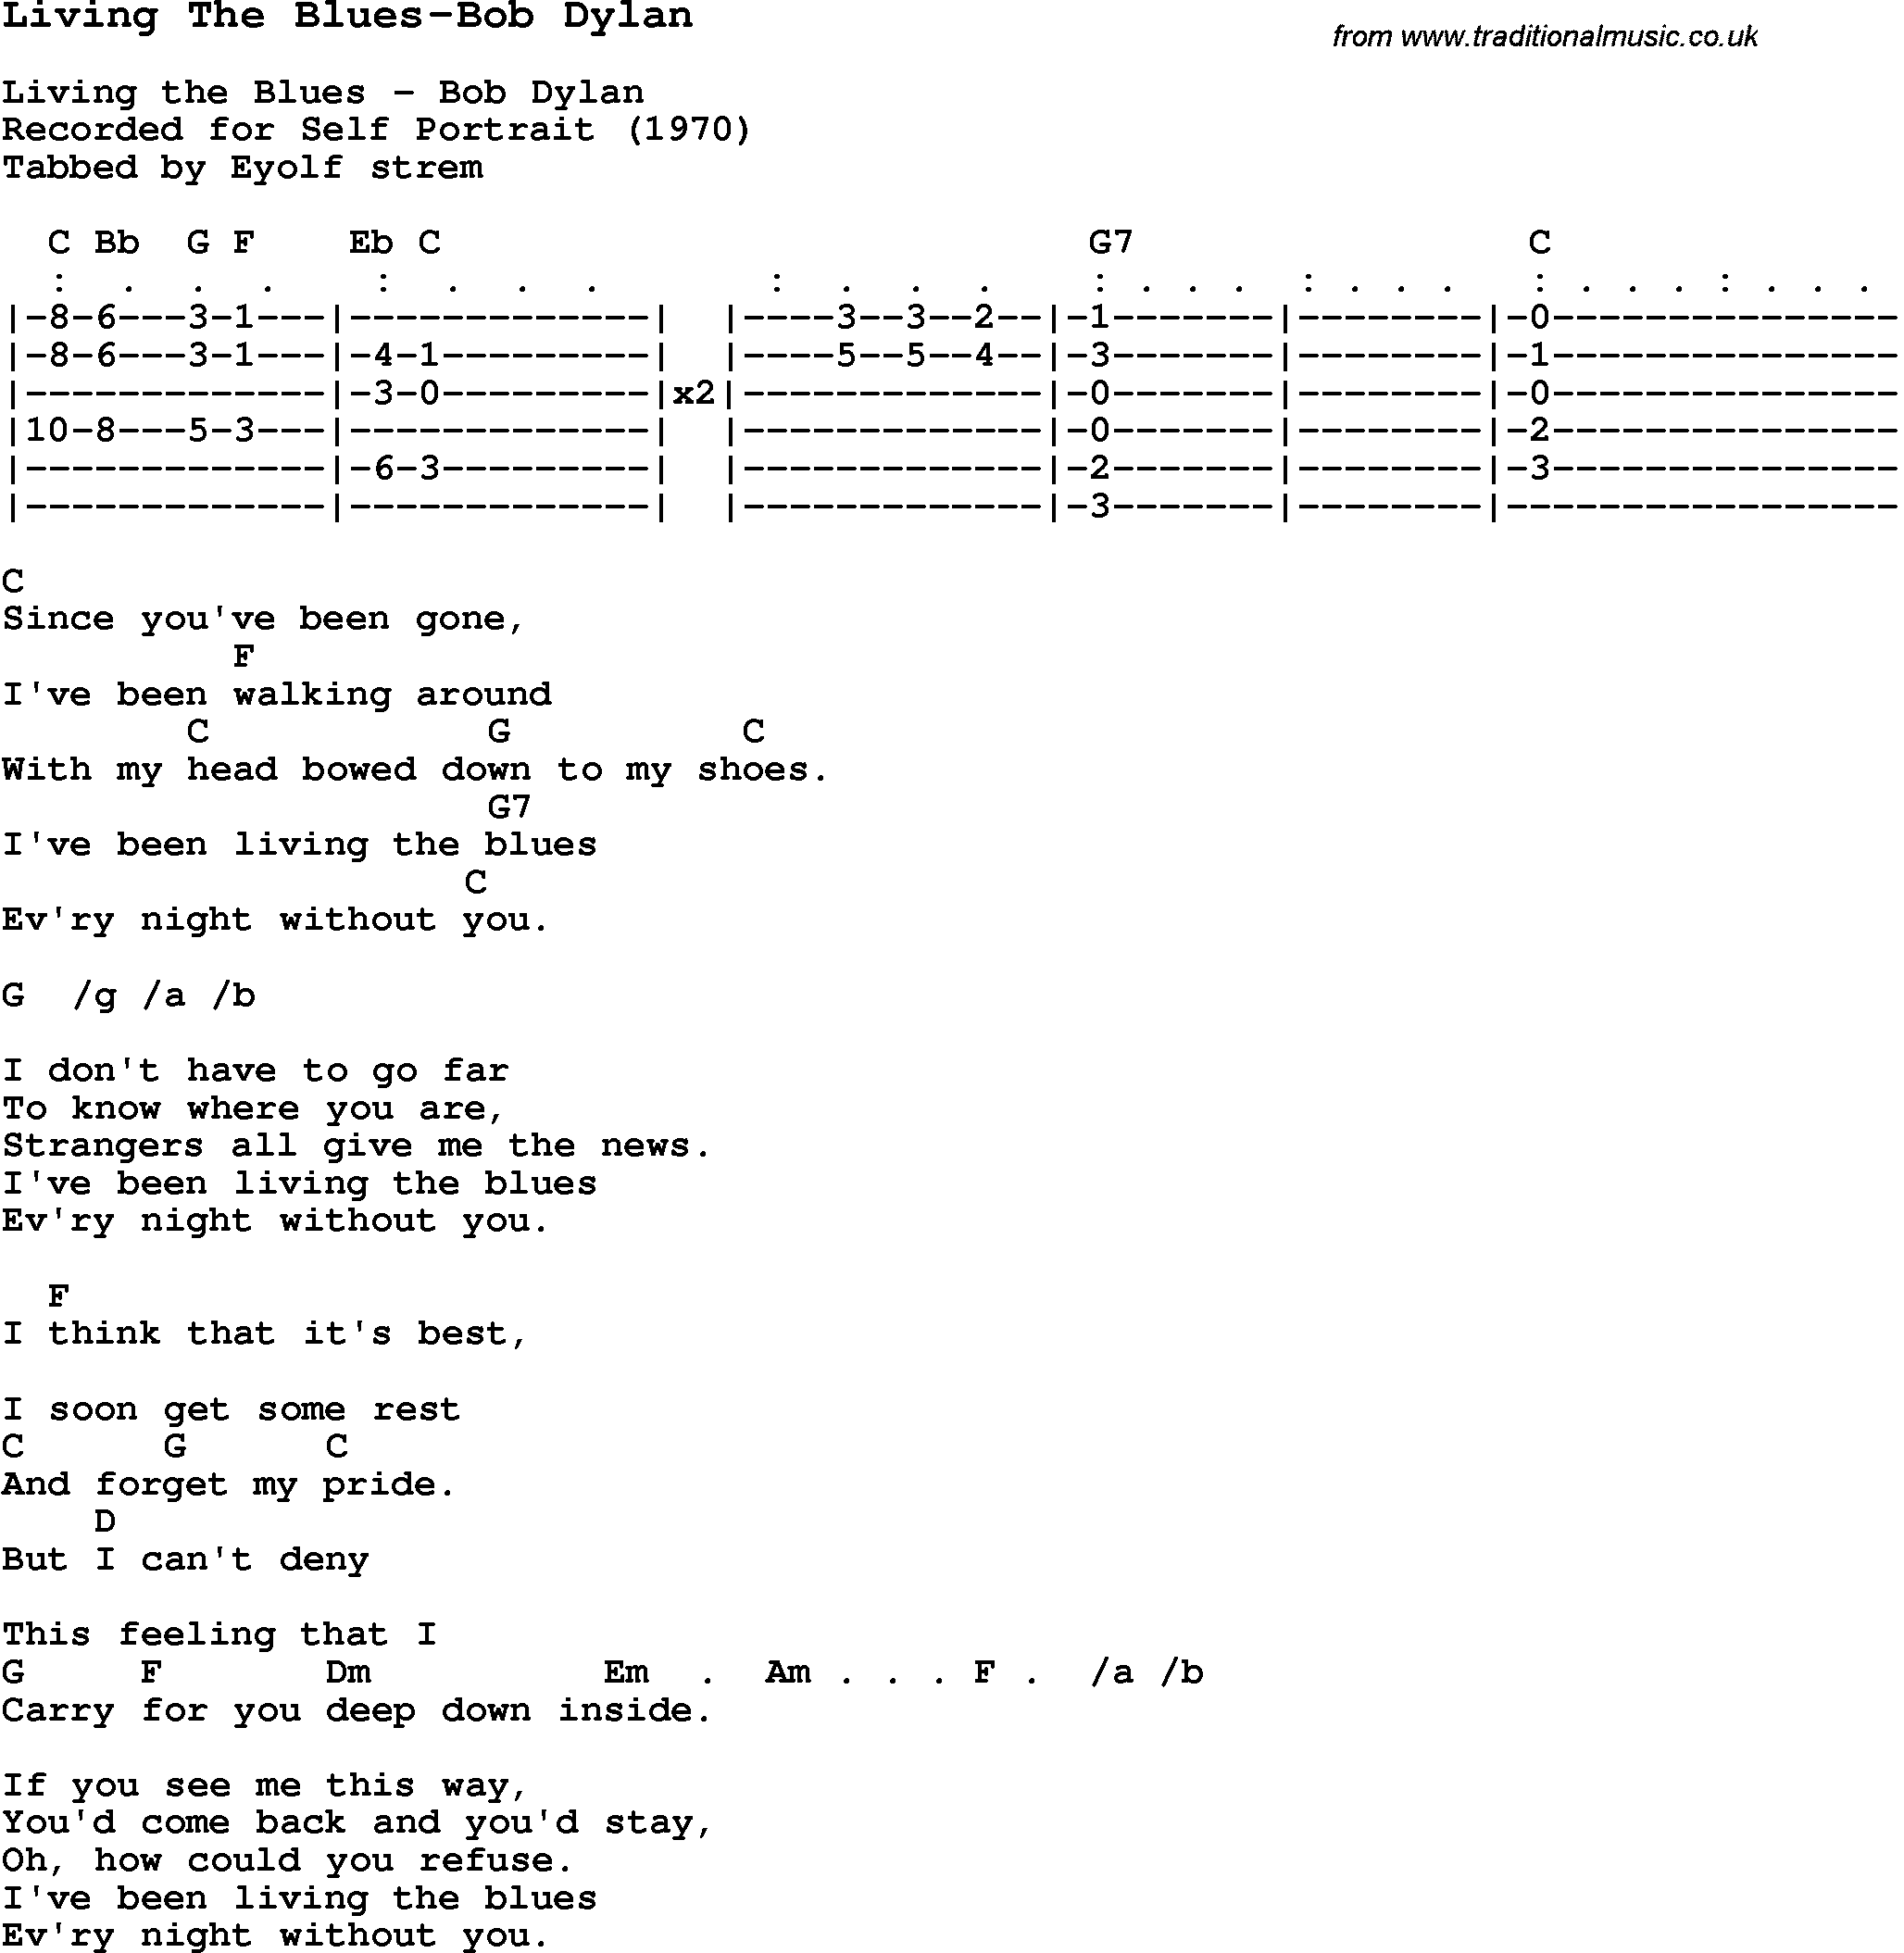 Blues Guitar Song, lyrics, chords, tablature, playing hints for Living The Blues-Bob Dylan